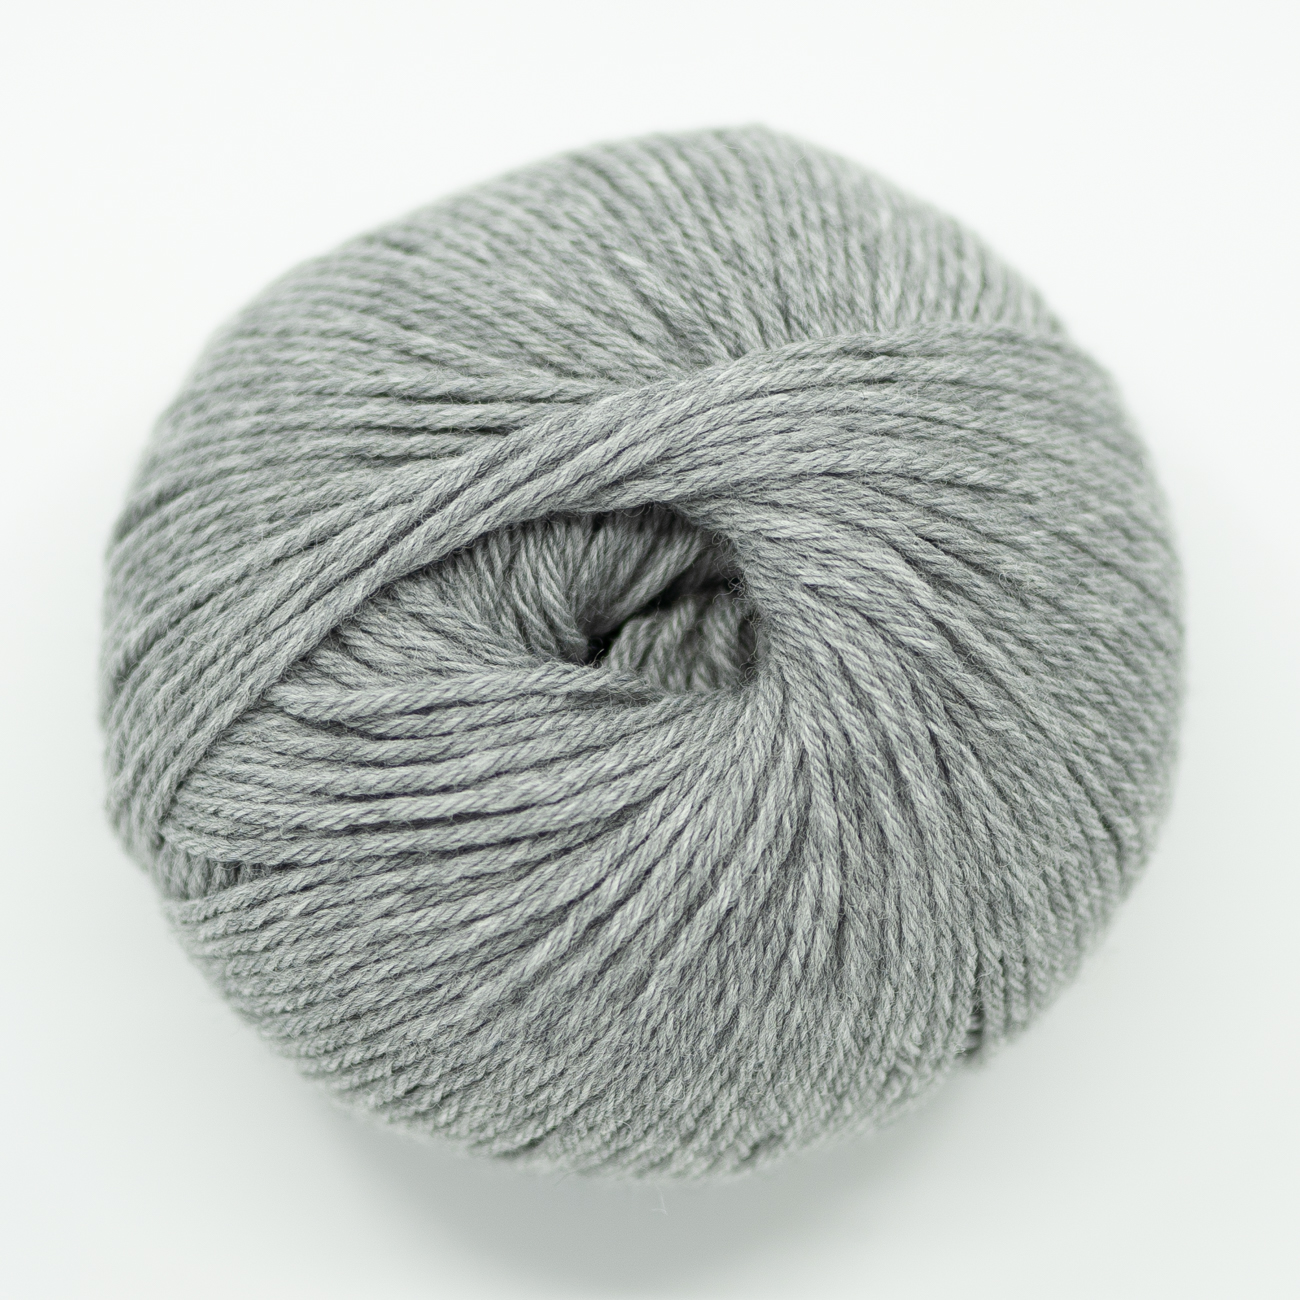  - Cloudy grey | Pop merino | Merino wool yarn - by HipKnitShop - 27/09/2020